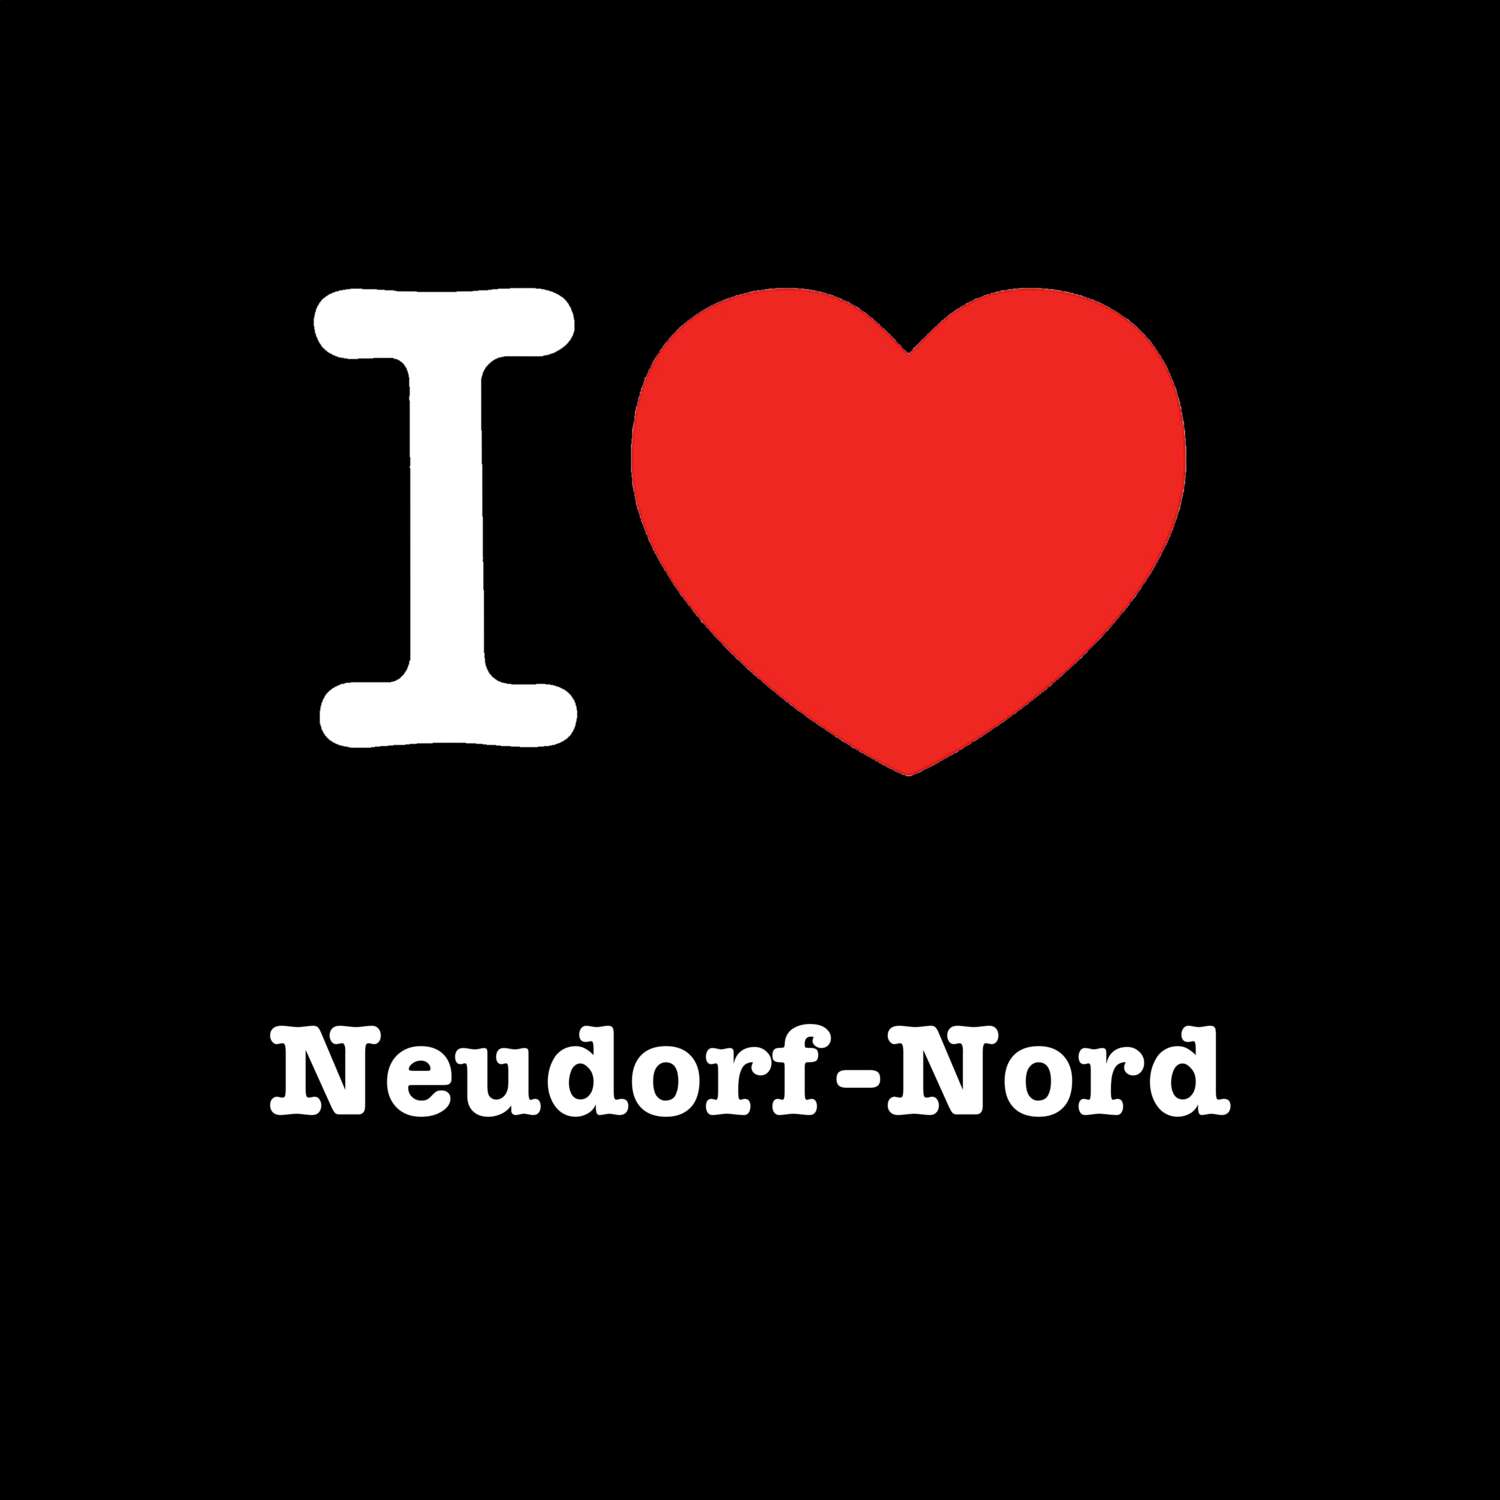 Neudorf-Nord T-Shirt »I love«